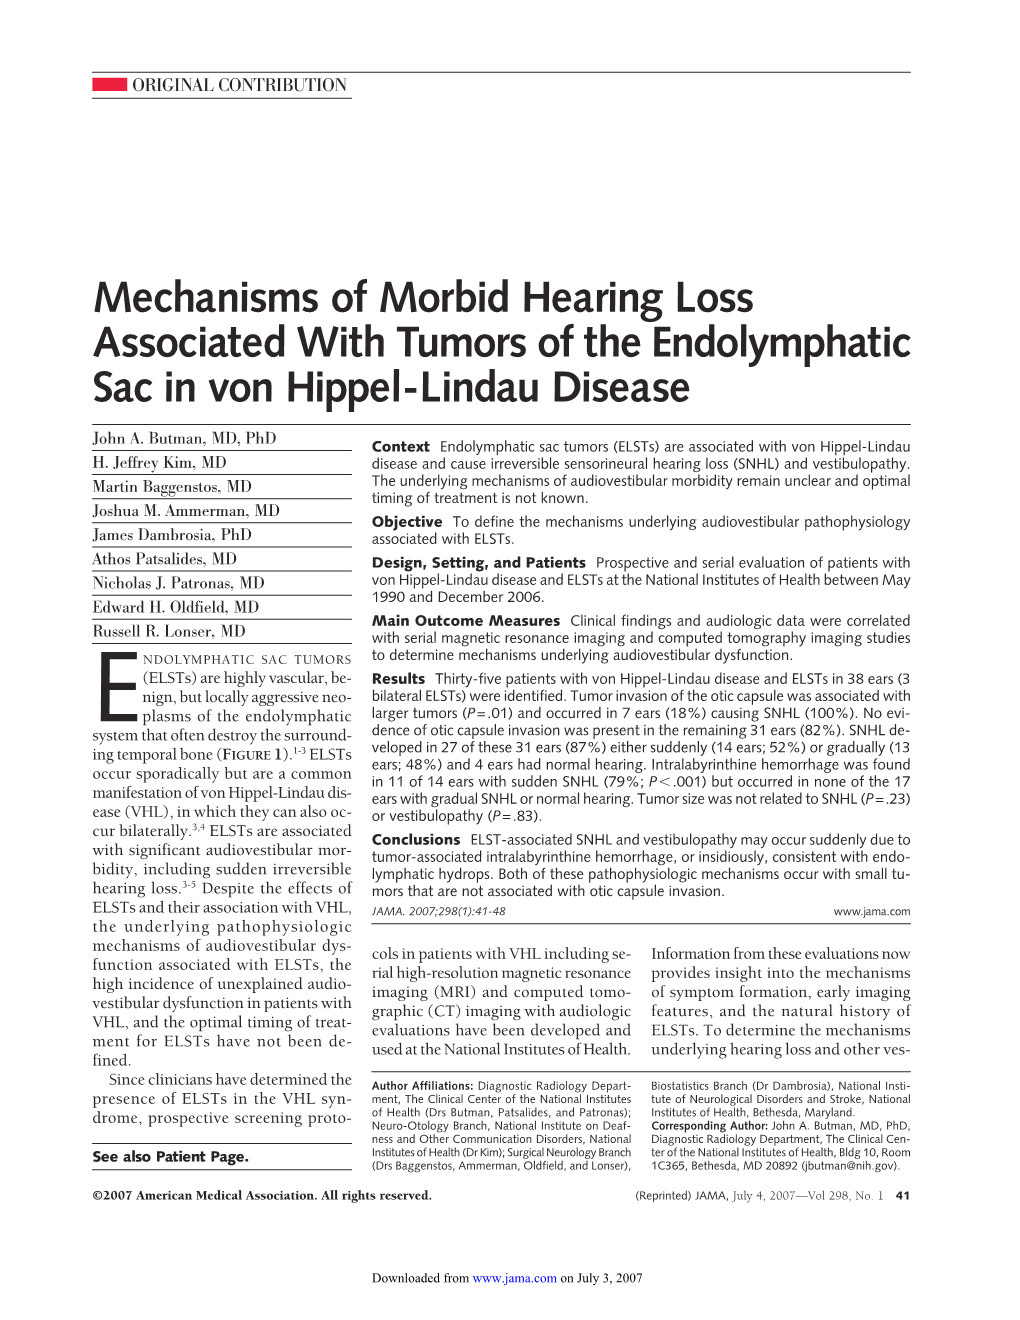 Mechanisms of Morbid Hearing Loss Associated with Tumors of the Endolymphatic Sac in Von Hippel-Lindau Disease